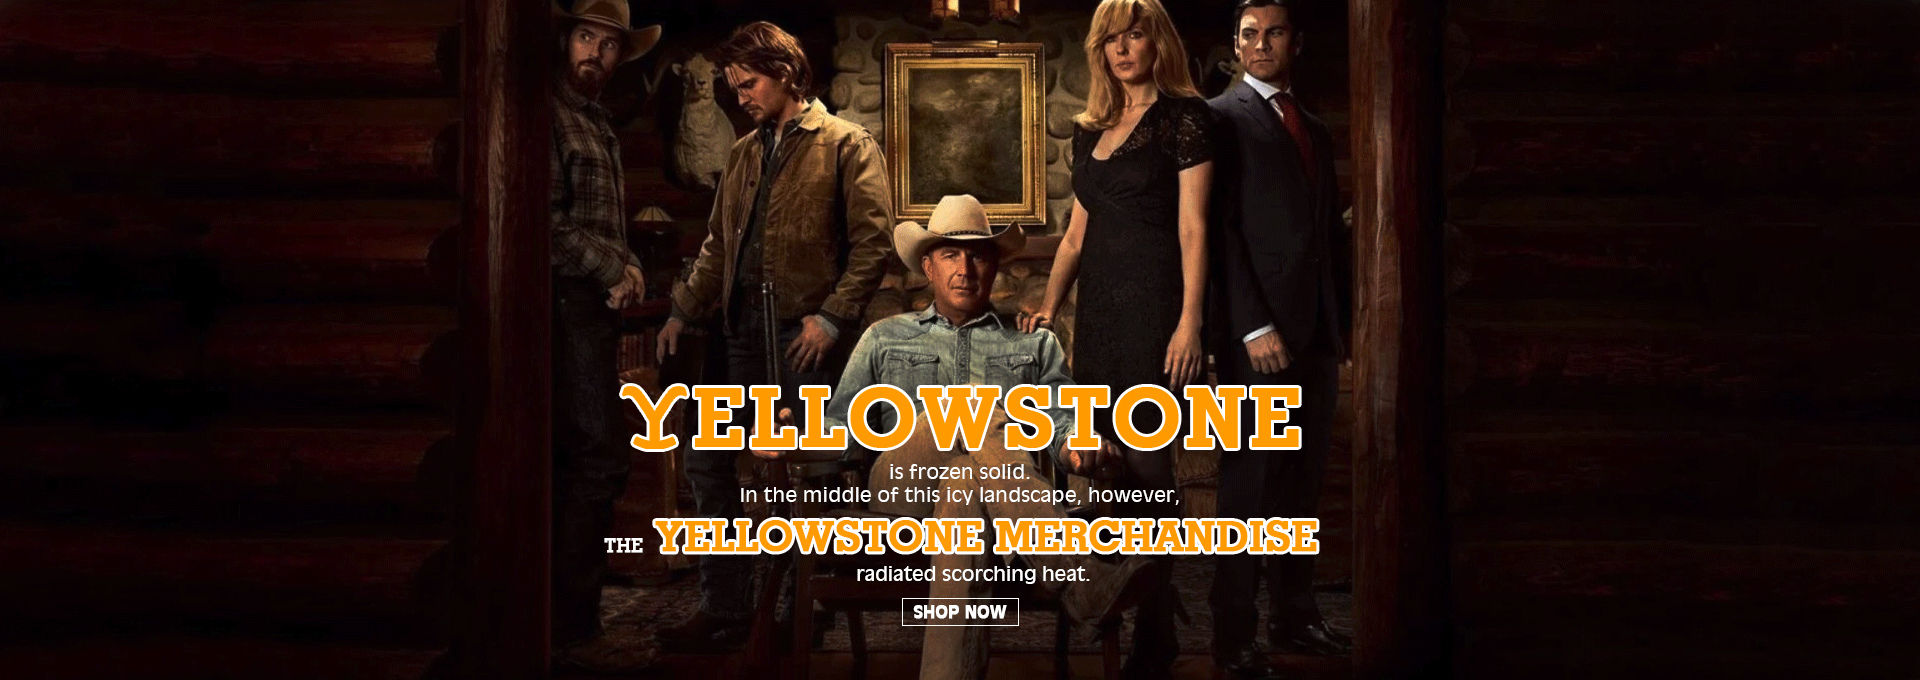 yellowstone merchandise